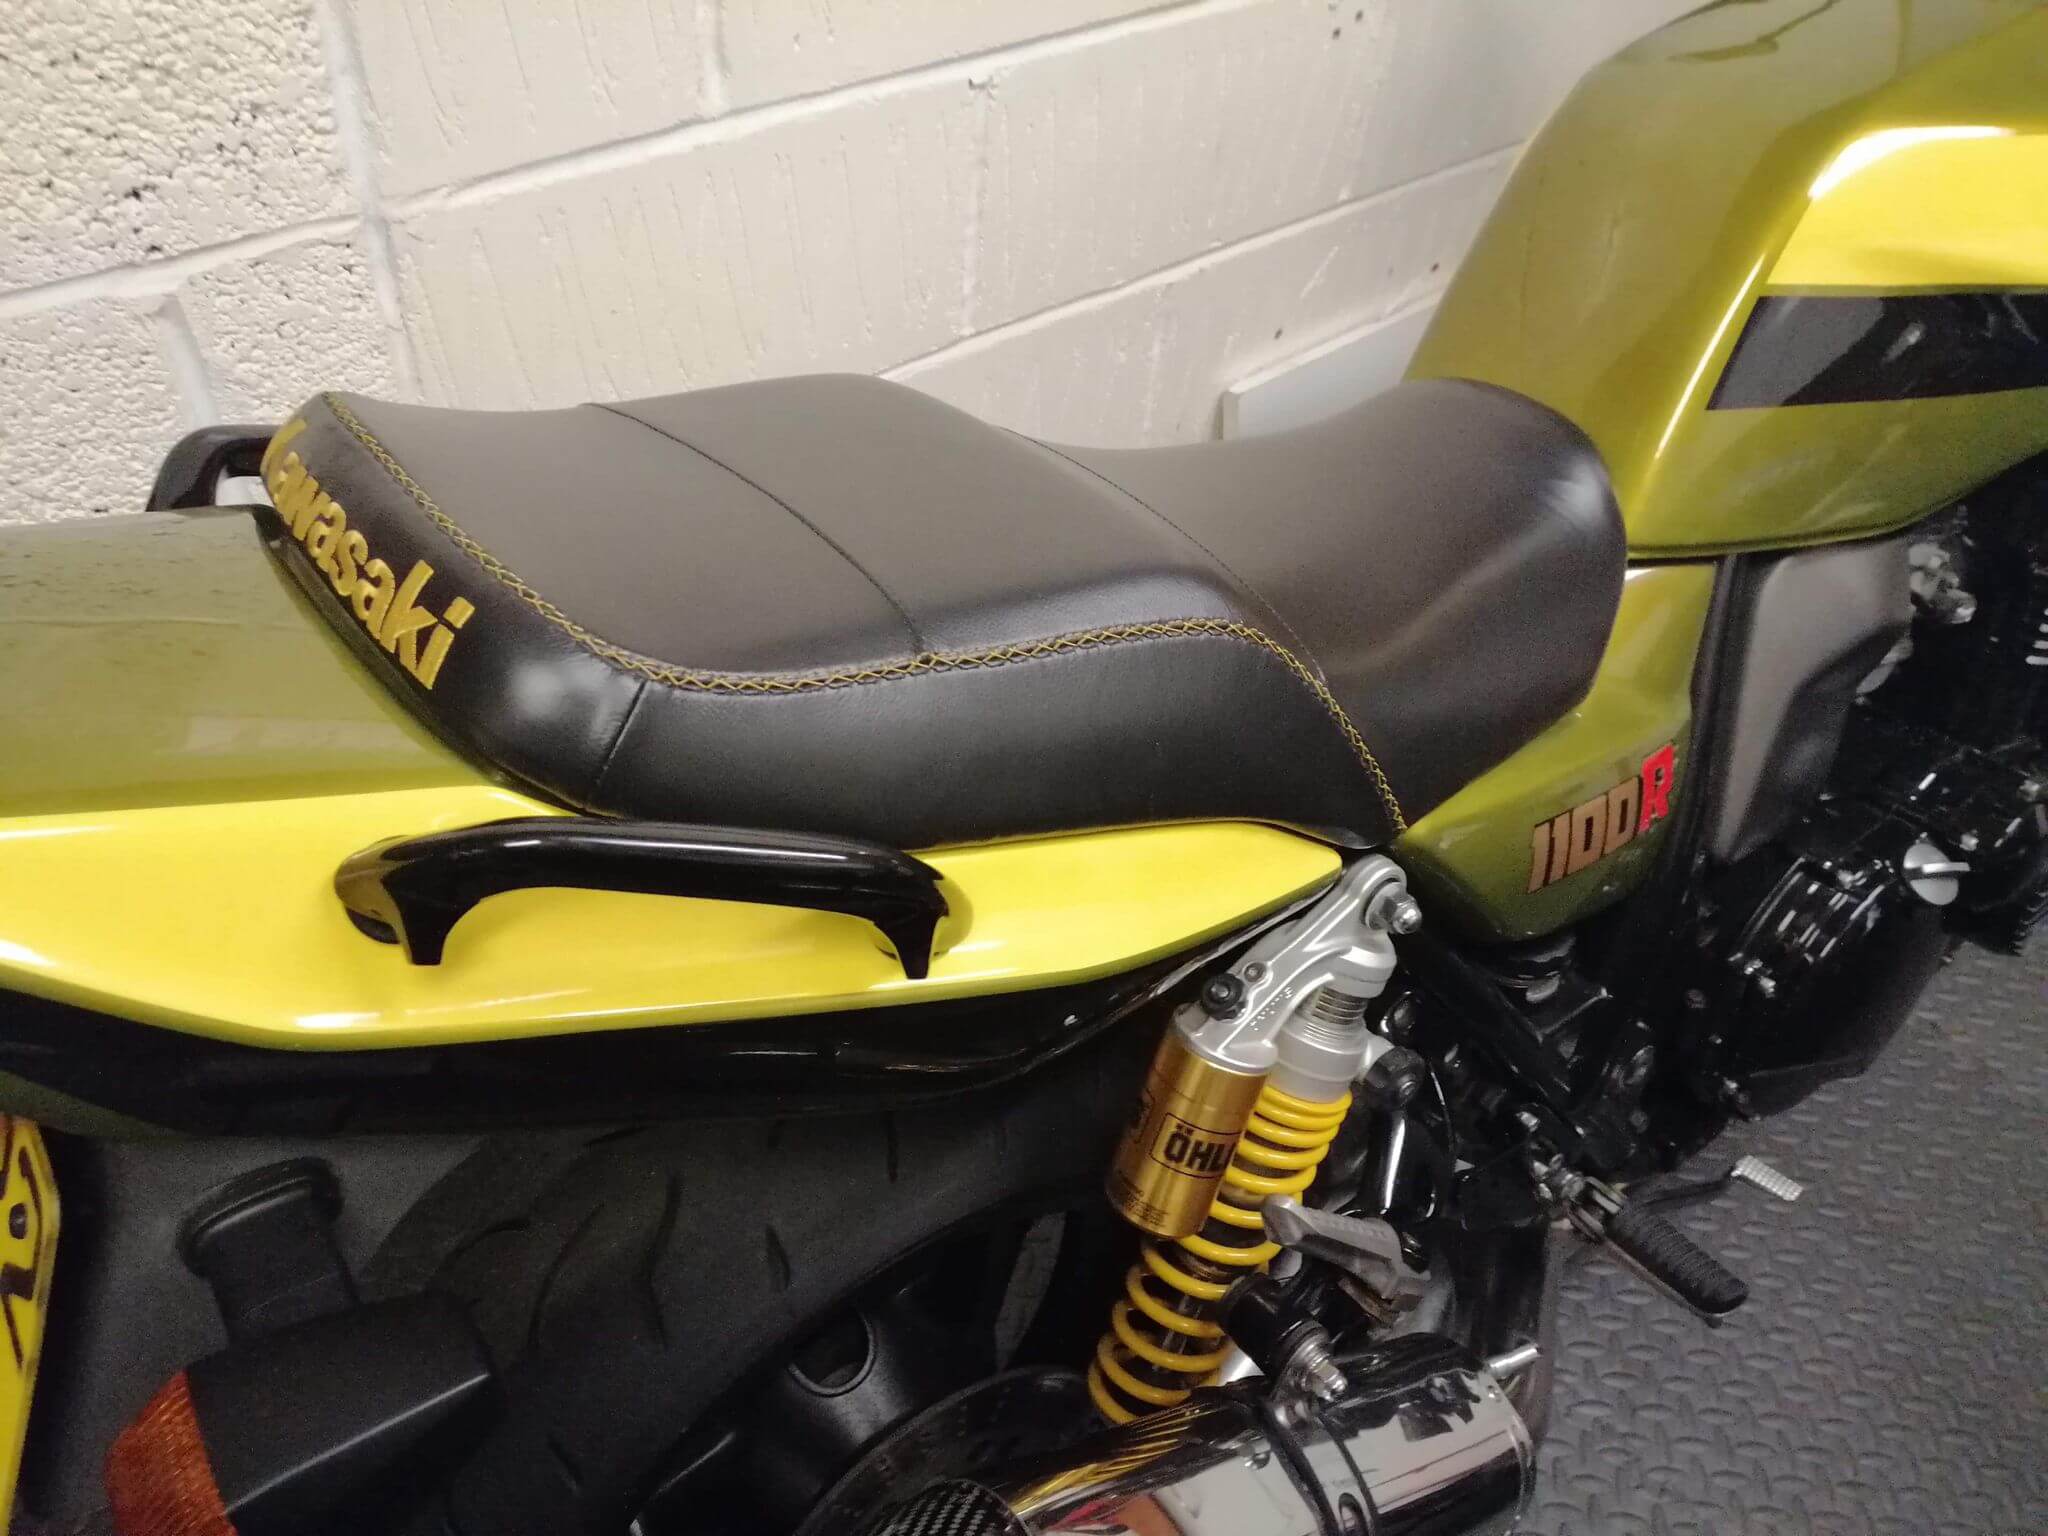 Bike seat yellow